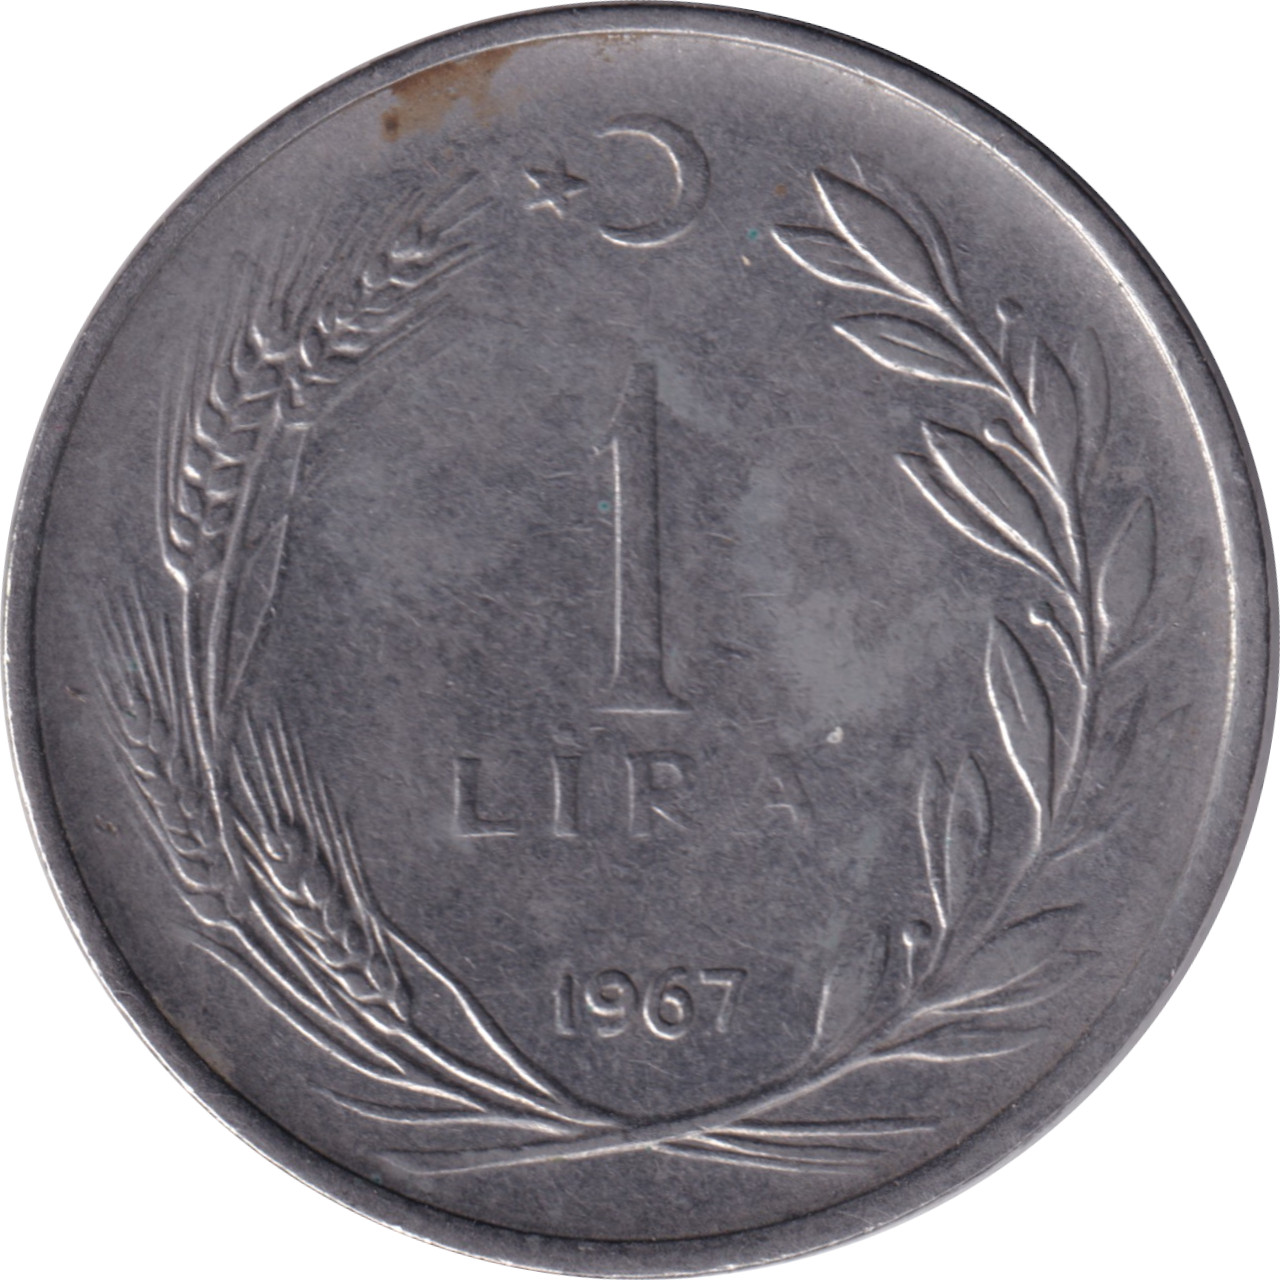 1 lira - Kemal Ataturk - Type 2